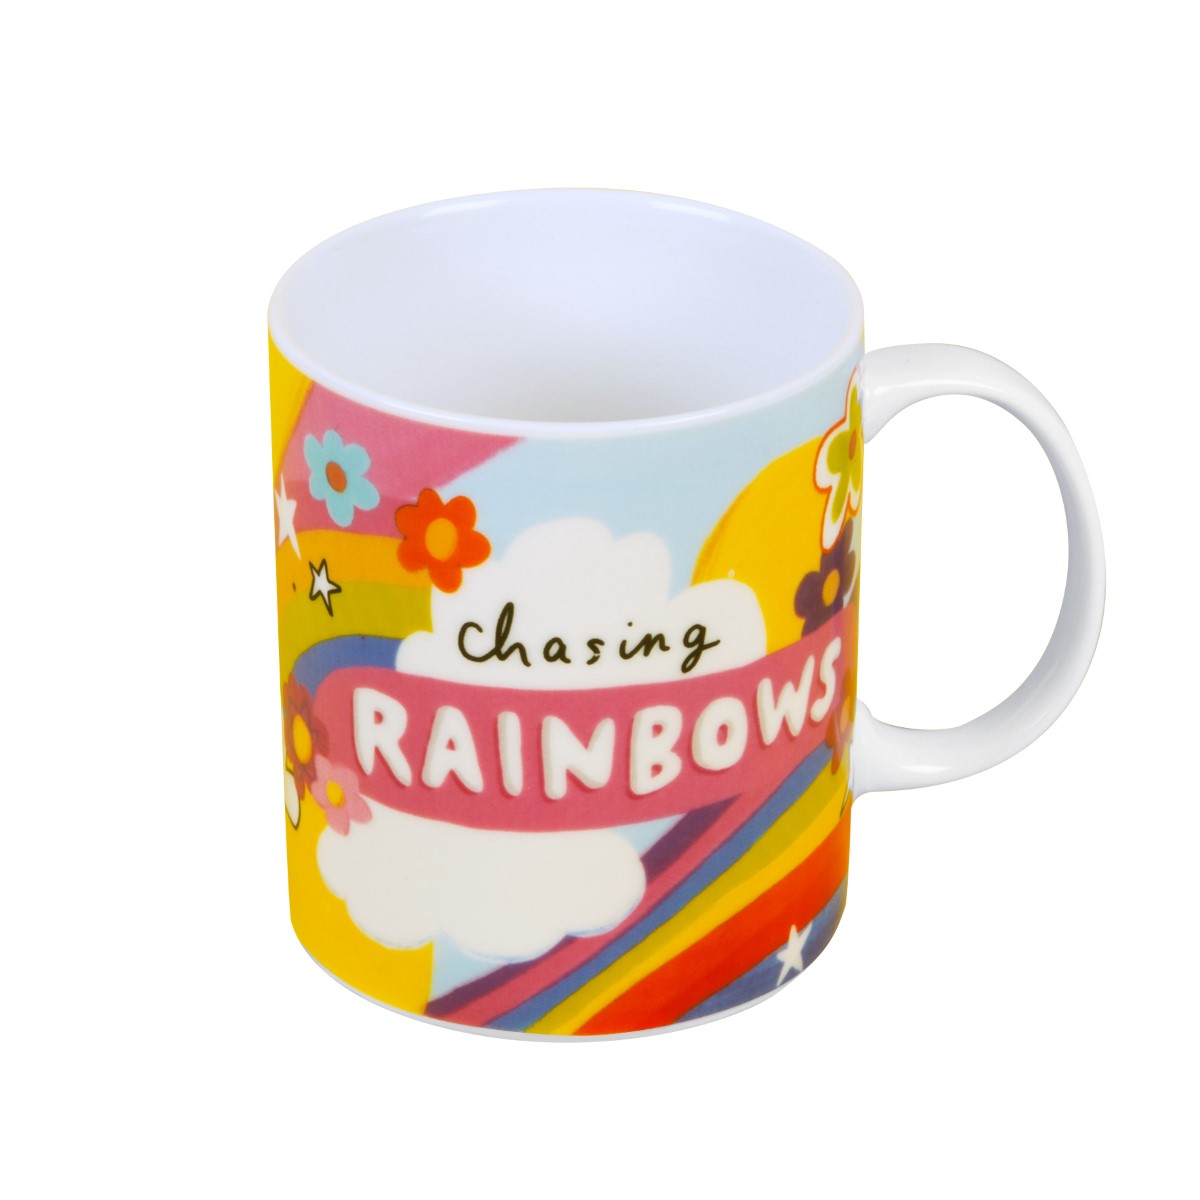 The Happy News Chasing Rainbows Mug 400ml